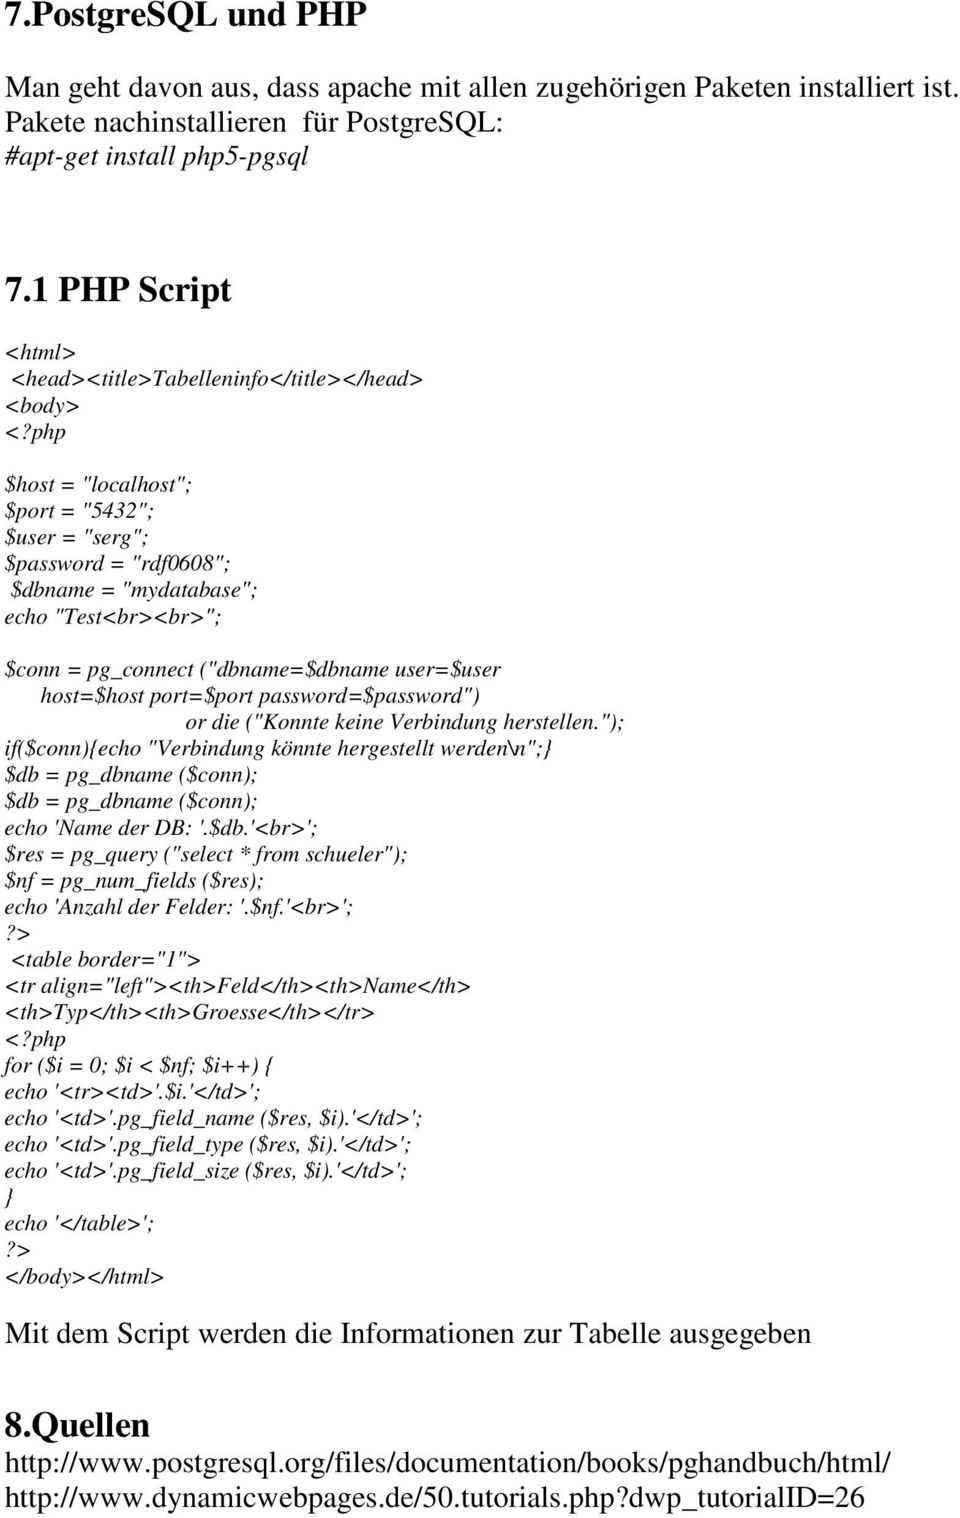 php $host = "localhost"; $port = "5432"; $user = "serg"; $password = "rdf0608"; $dbname = "mydatabase"; echo "Test<br><br>"; $conn = pg_connect ("dbname=$dbname user=$user host=$host port=$port